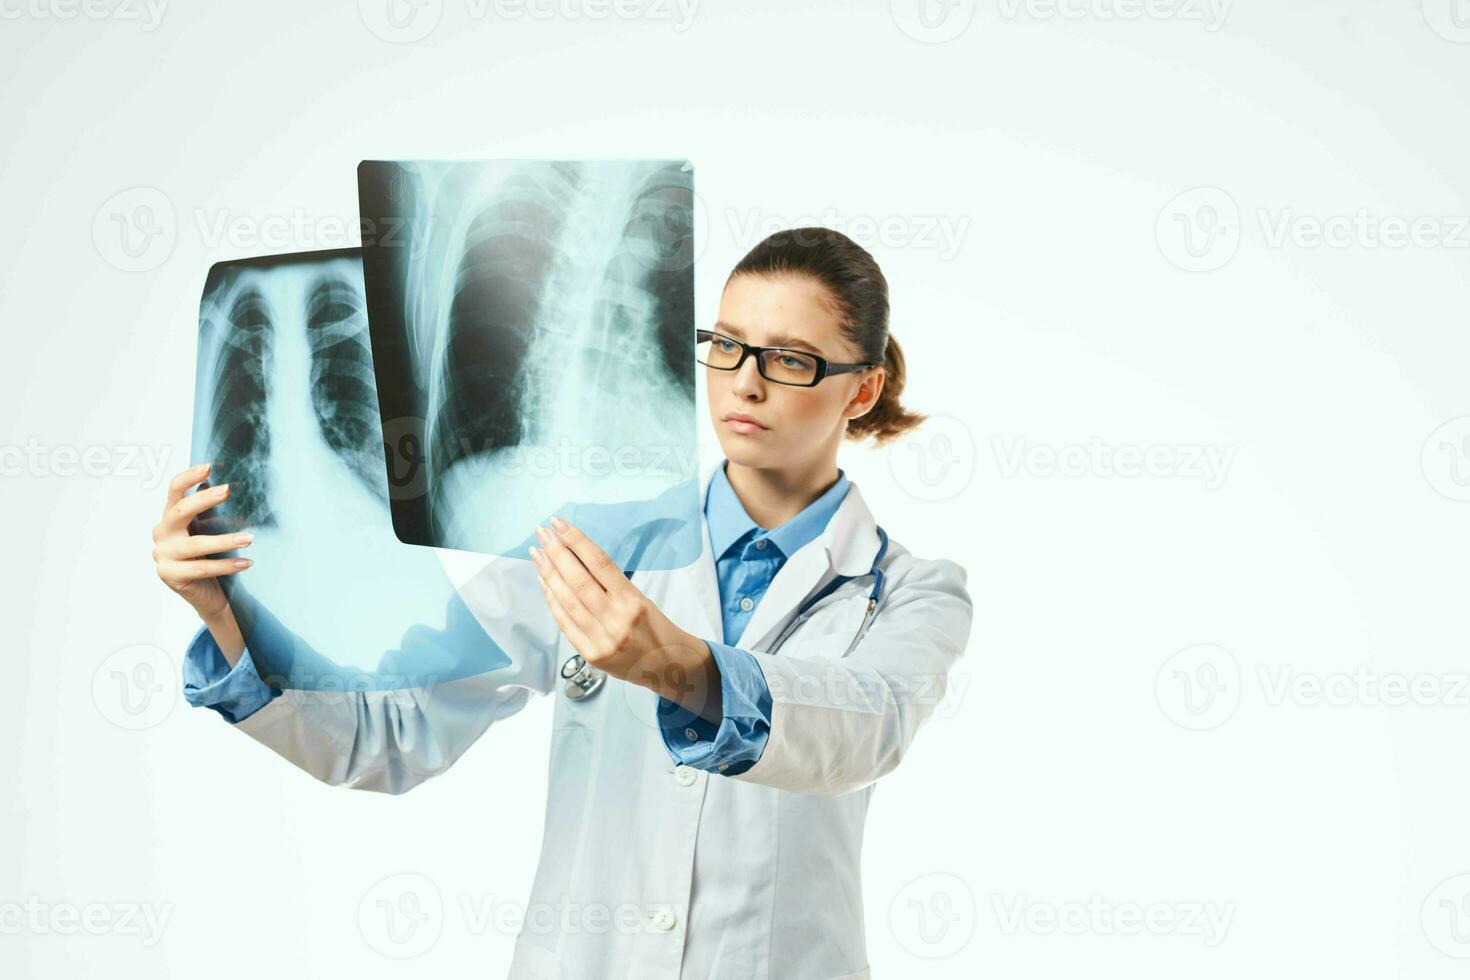 woman doctor radiologist x-rays examination hospital light background photo